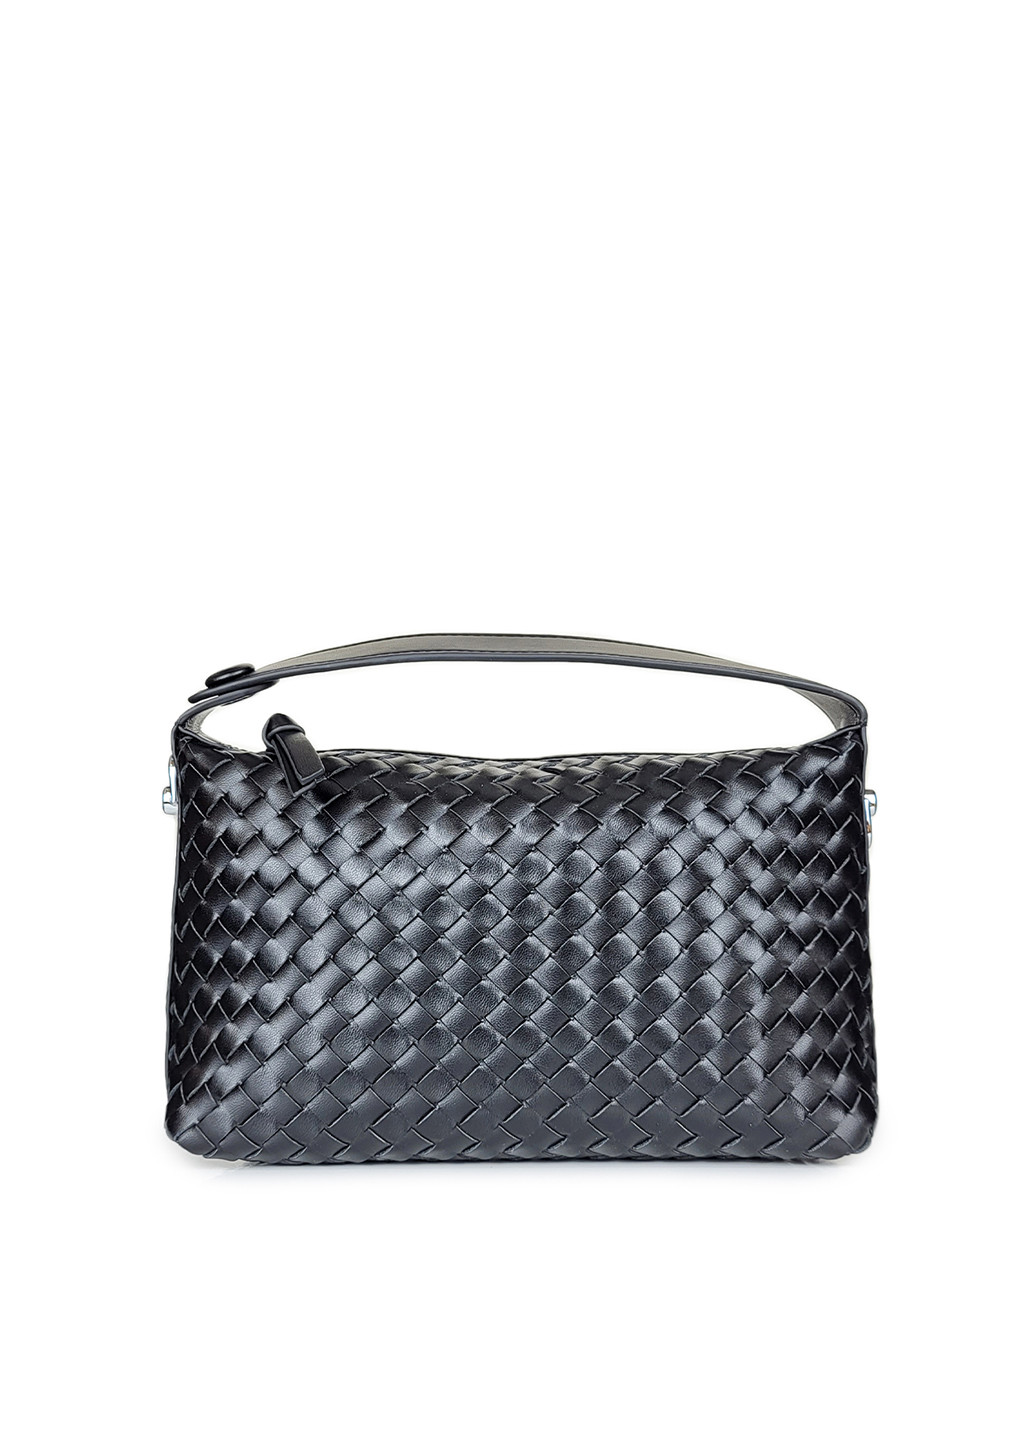 Маленька сумочка жіноча плетена,,9922 чорн Fashion (276390290)